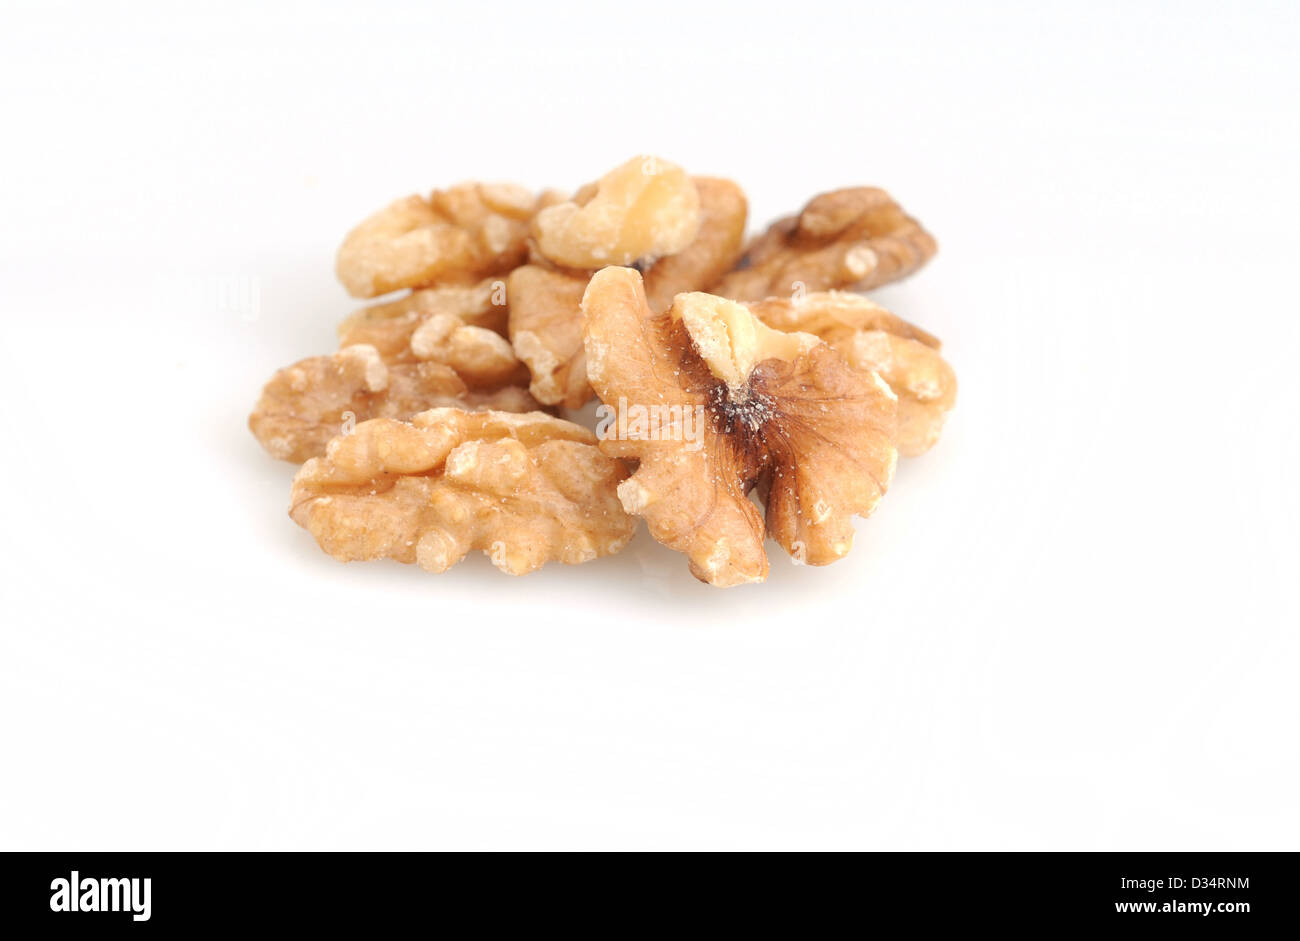 Raw walnuts on a white background Stock Photo